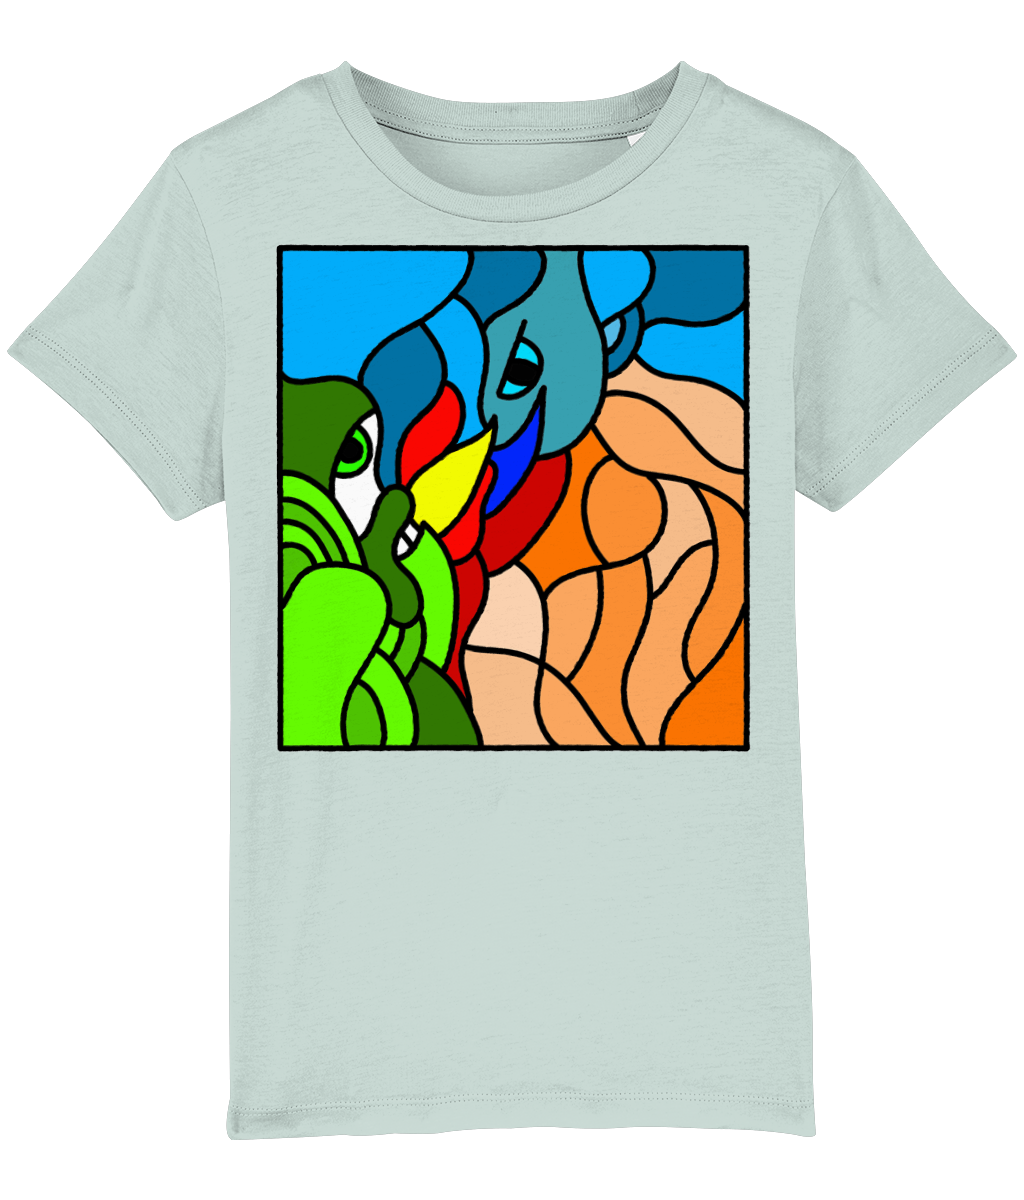 Kids Elemental T-Shirt